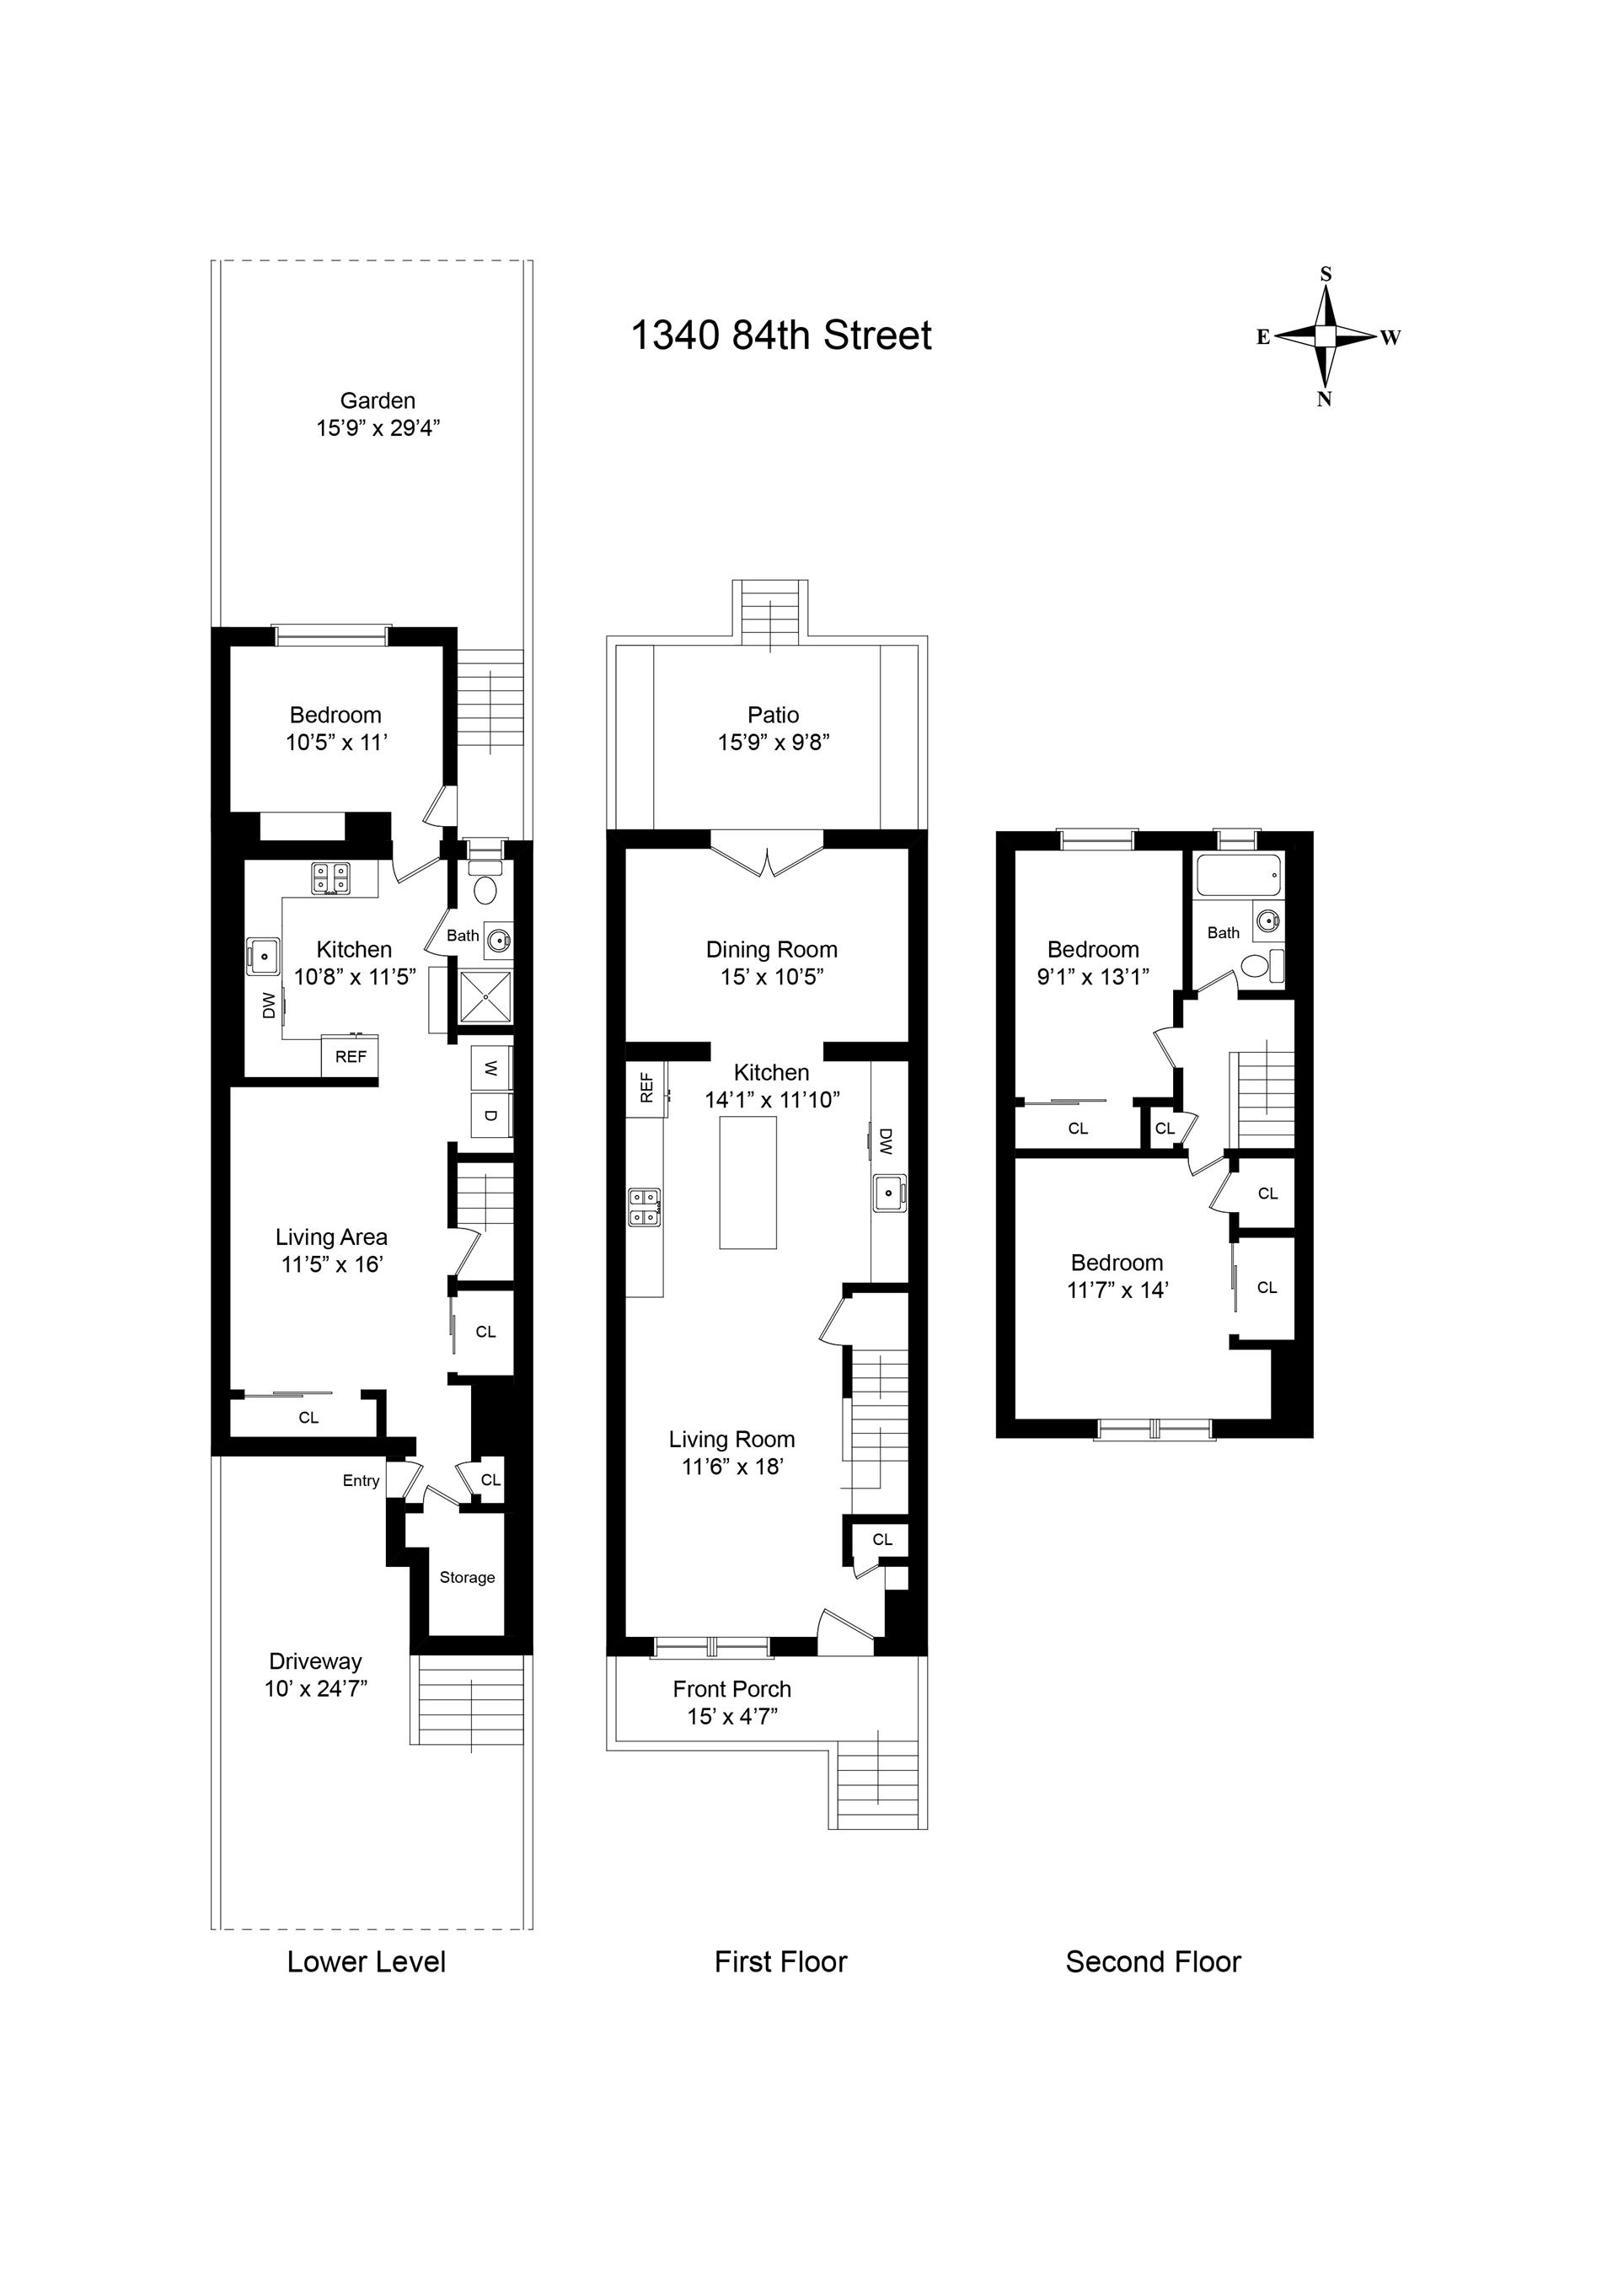 Floorplan for 1340 84th Street